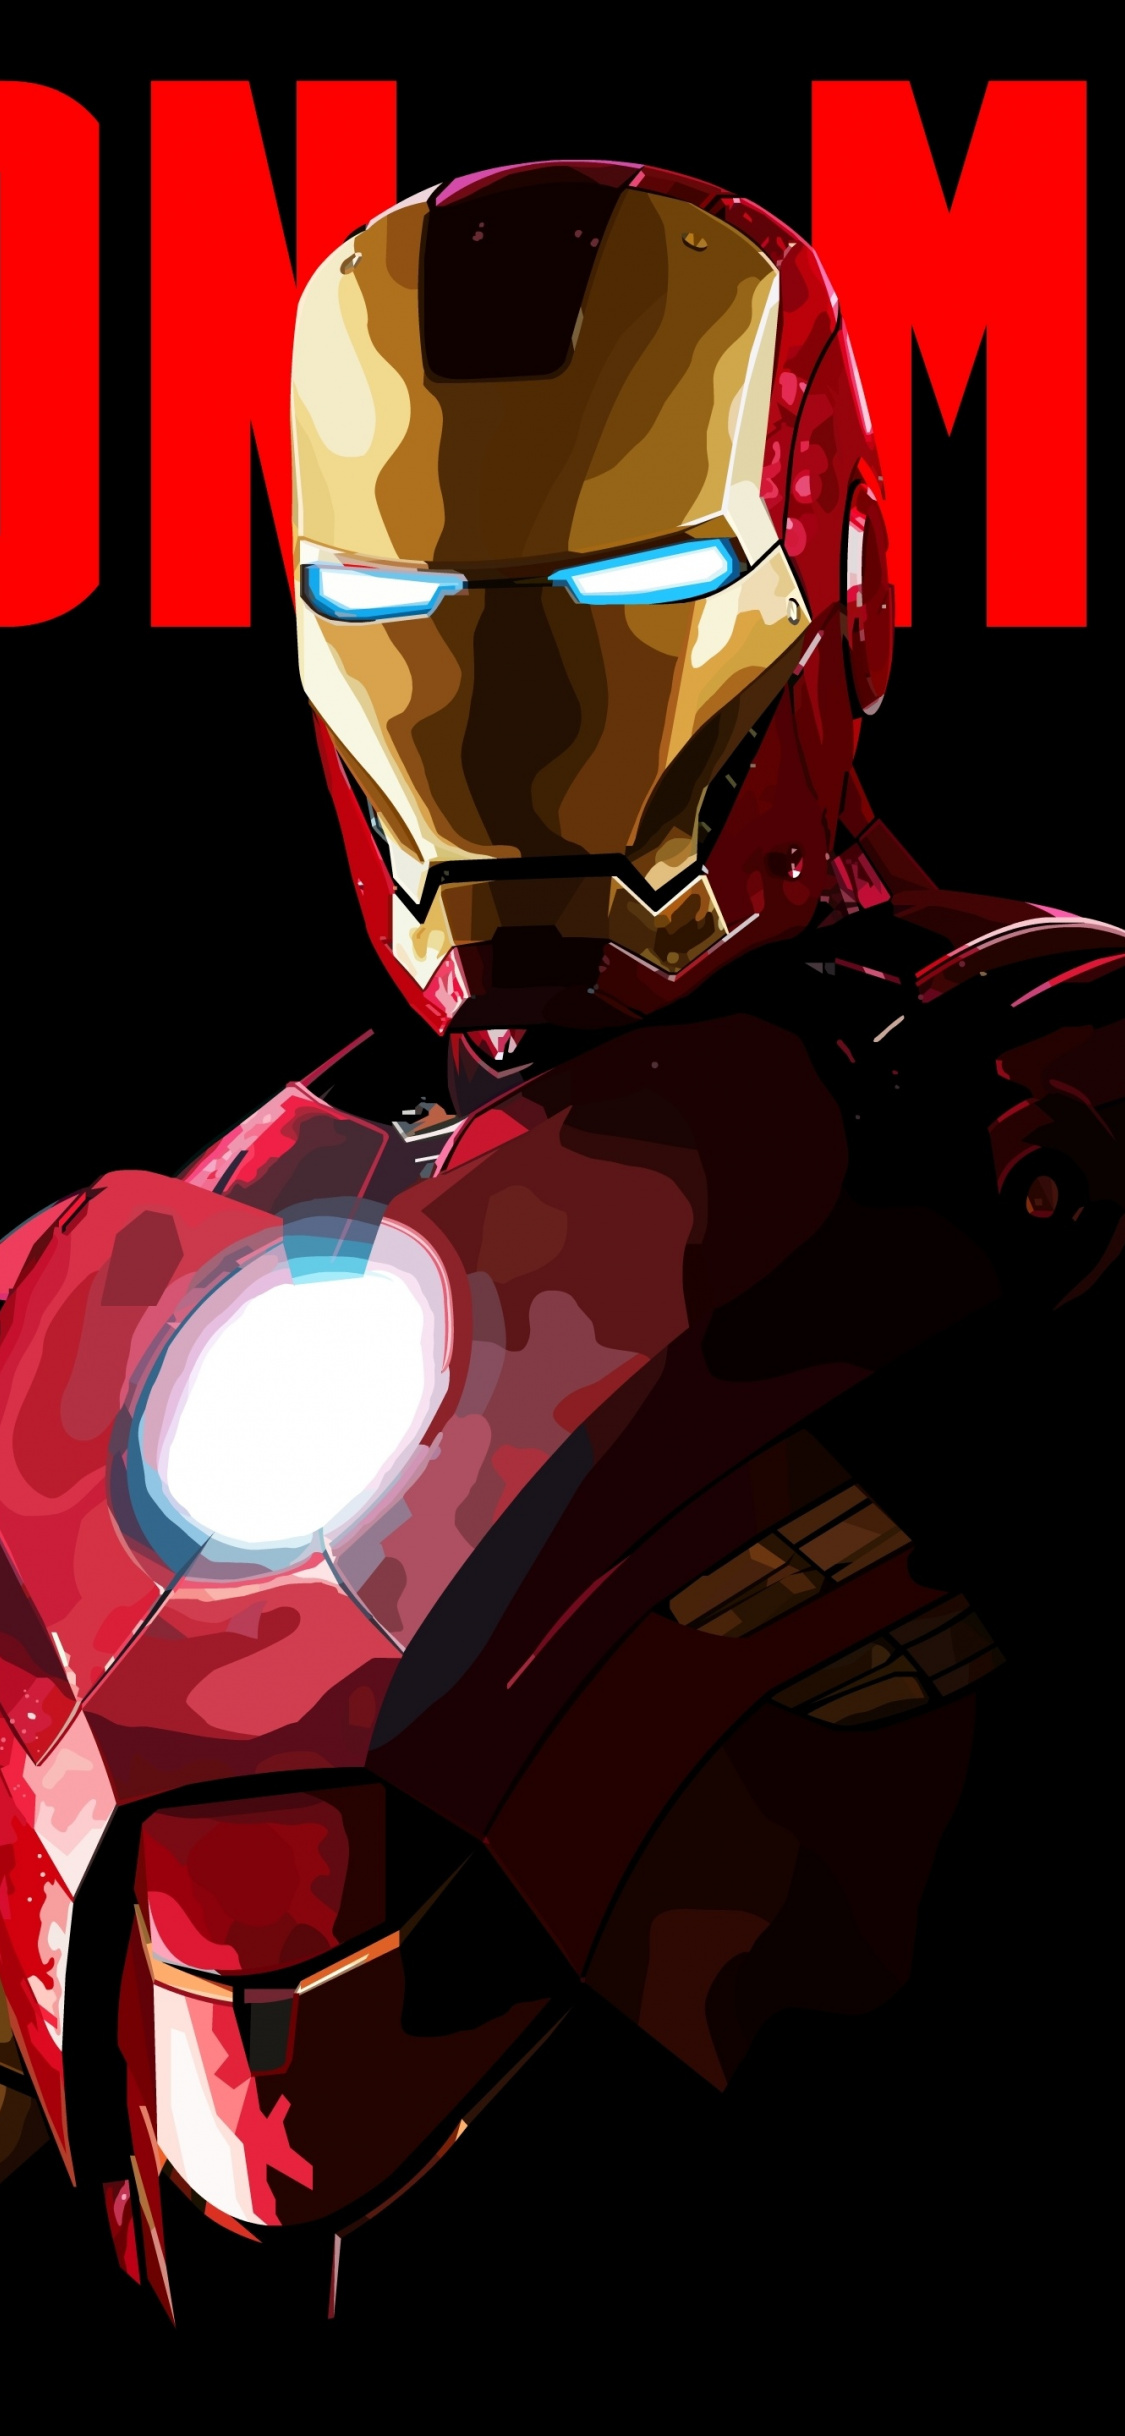 Wallpaper Iron Man Fan Art Superhero iPhone